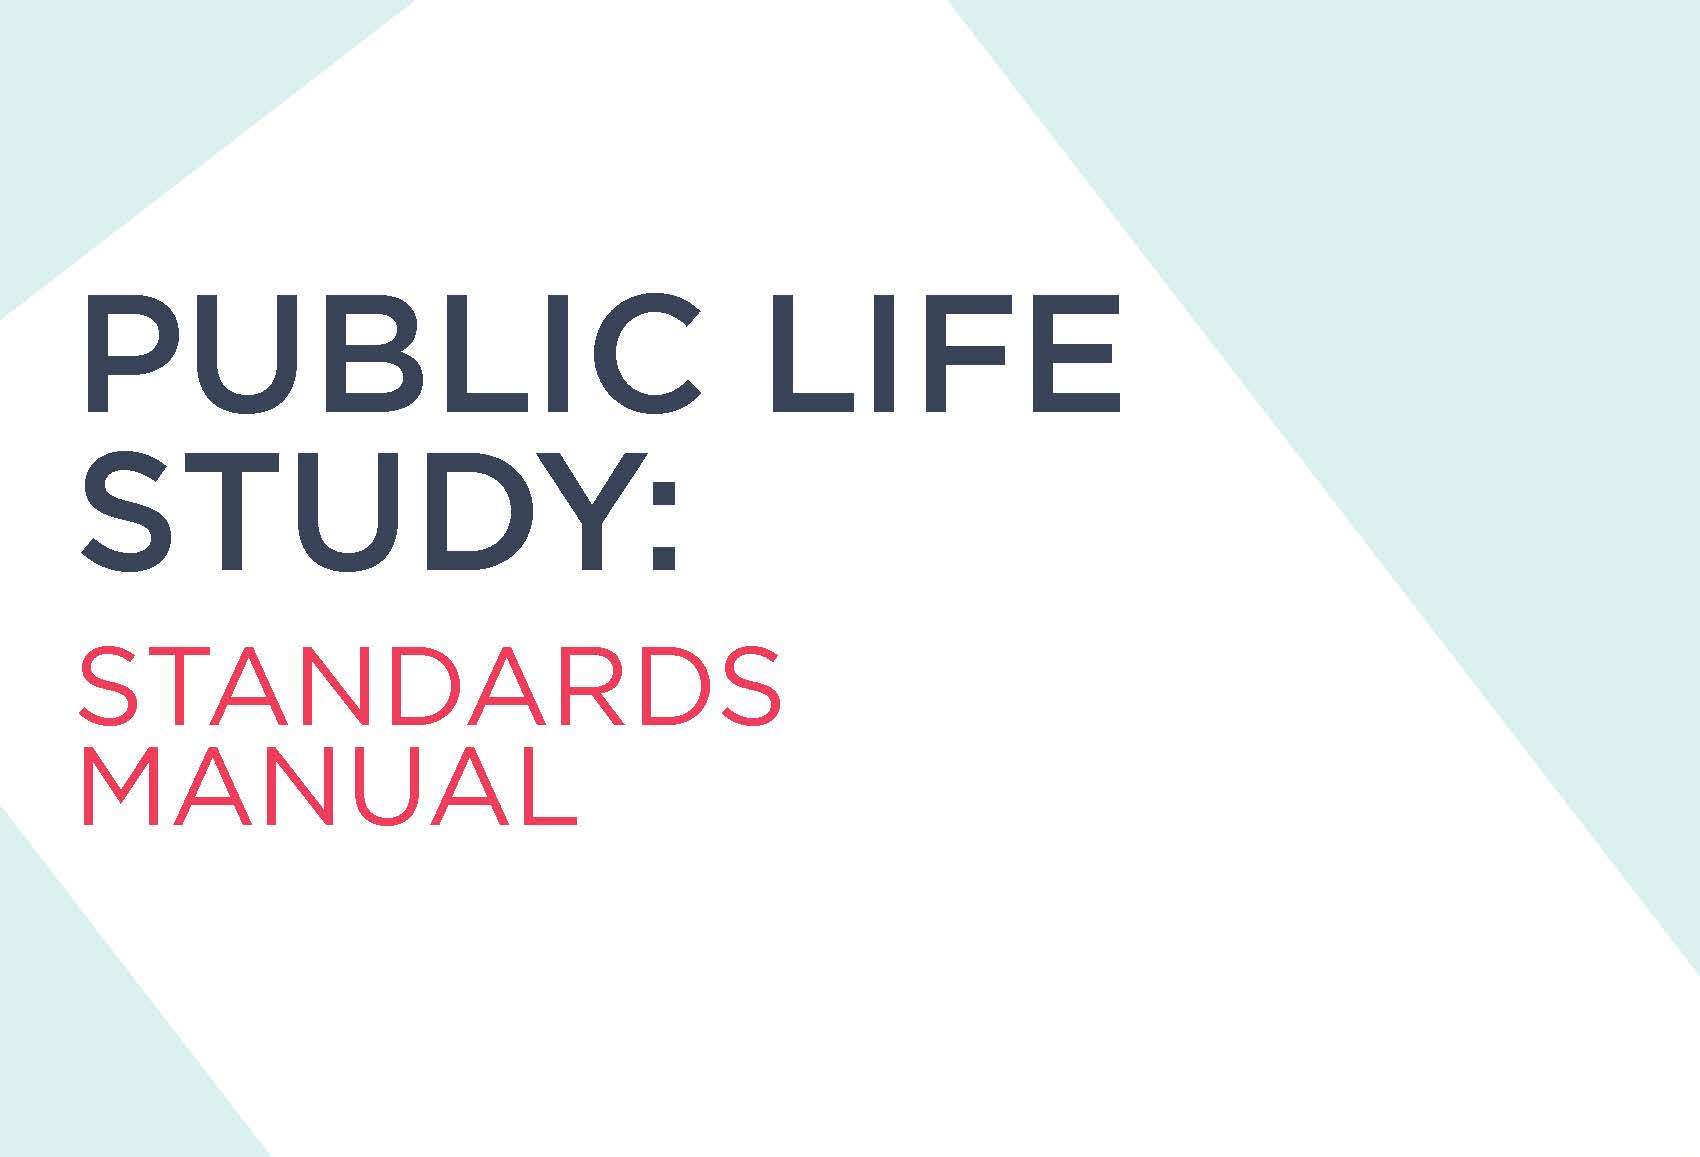 Public Life Survey Manual